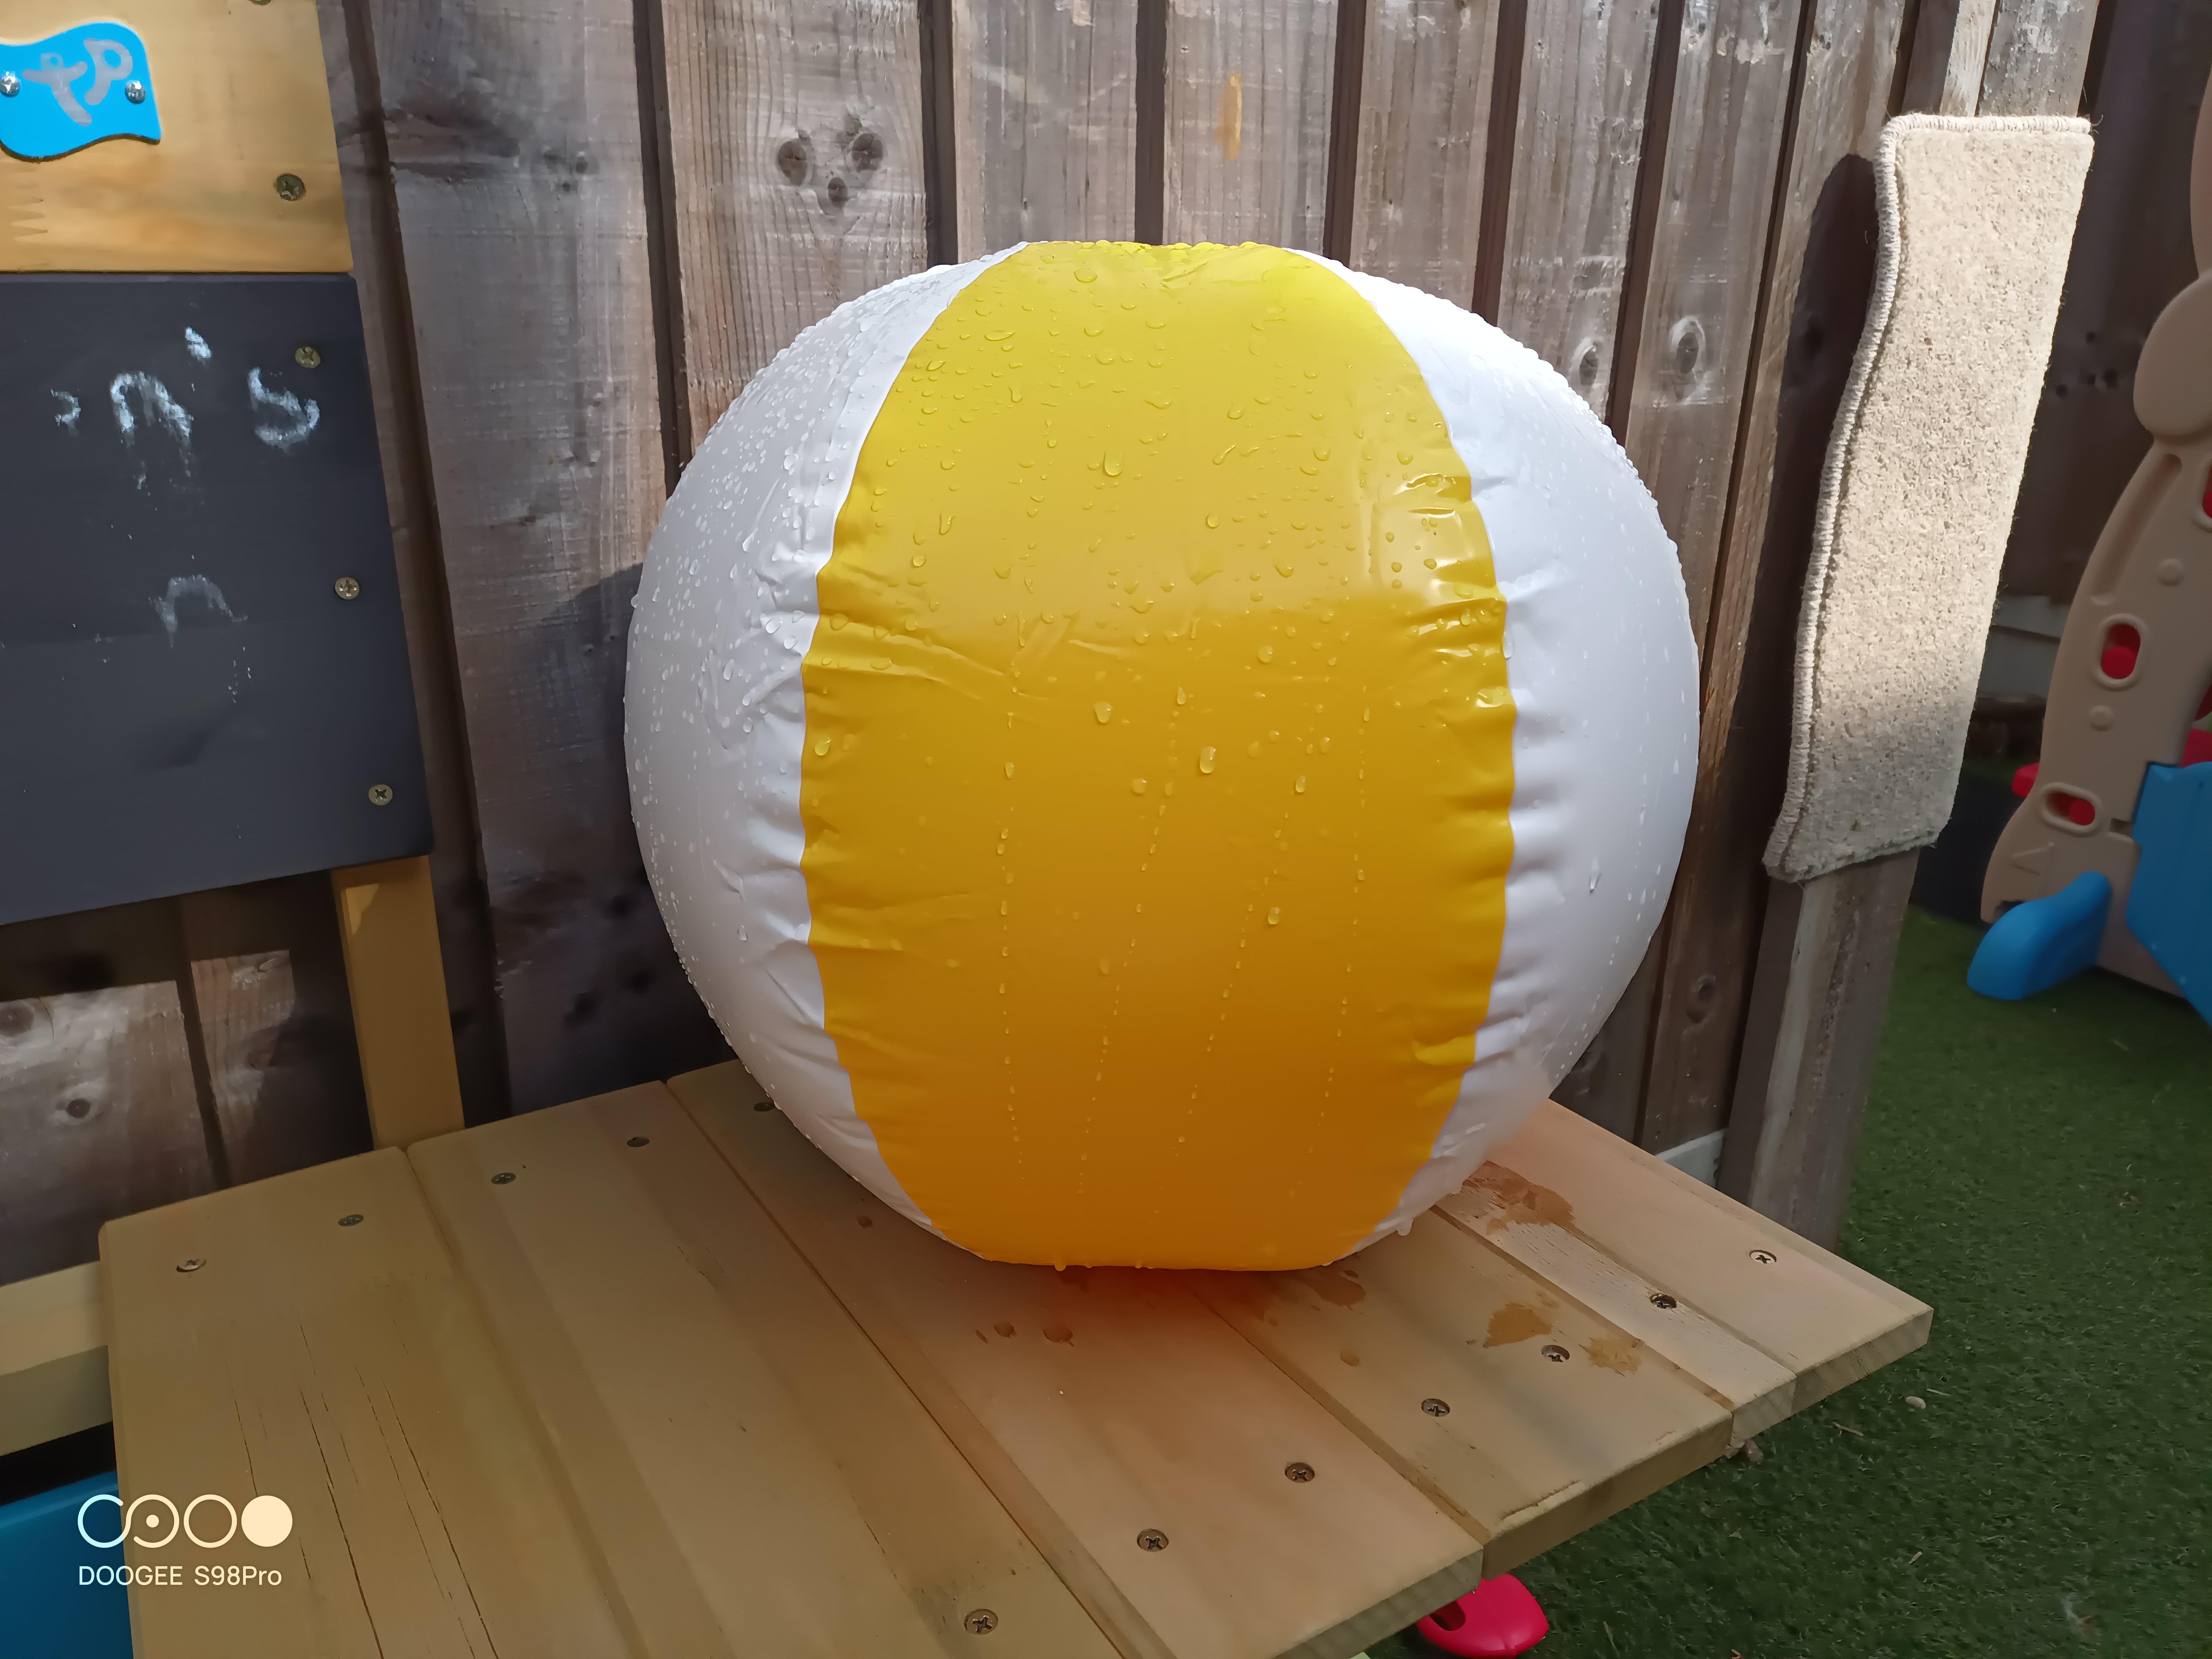 Doogee S98 Pro camera beachball outdoors